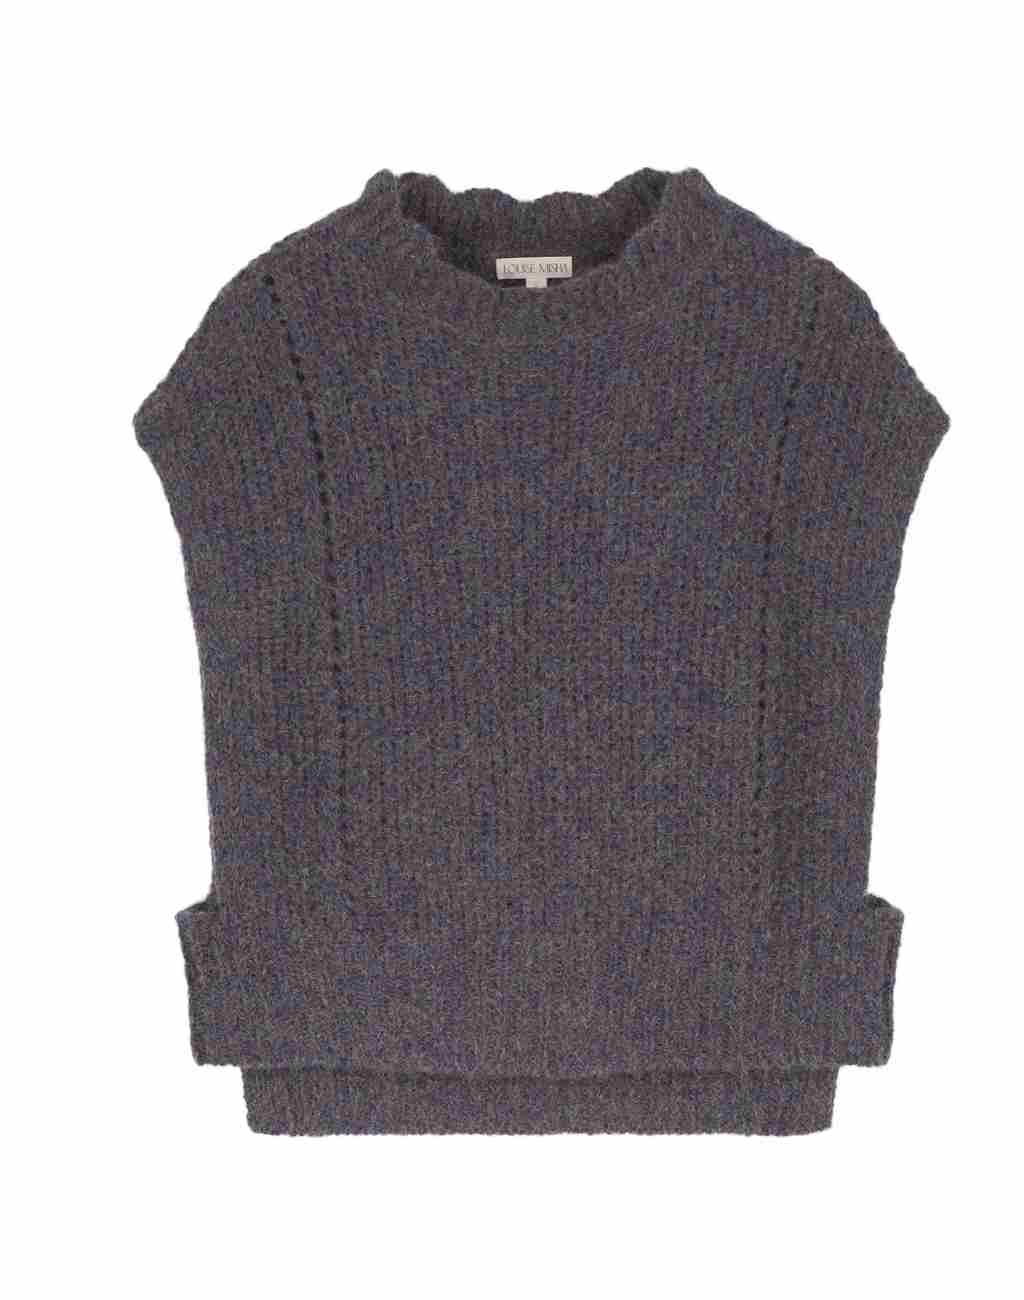 Sleeveless Knit Sigou Sweater with Scalloped Neckline - Visit Nifty Louise Misha 